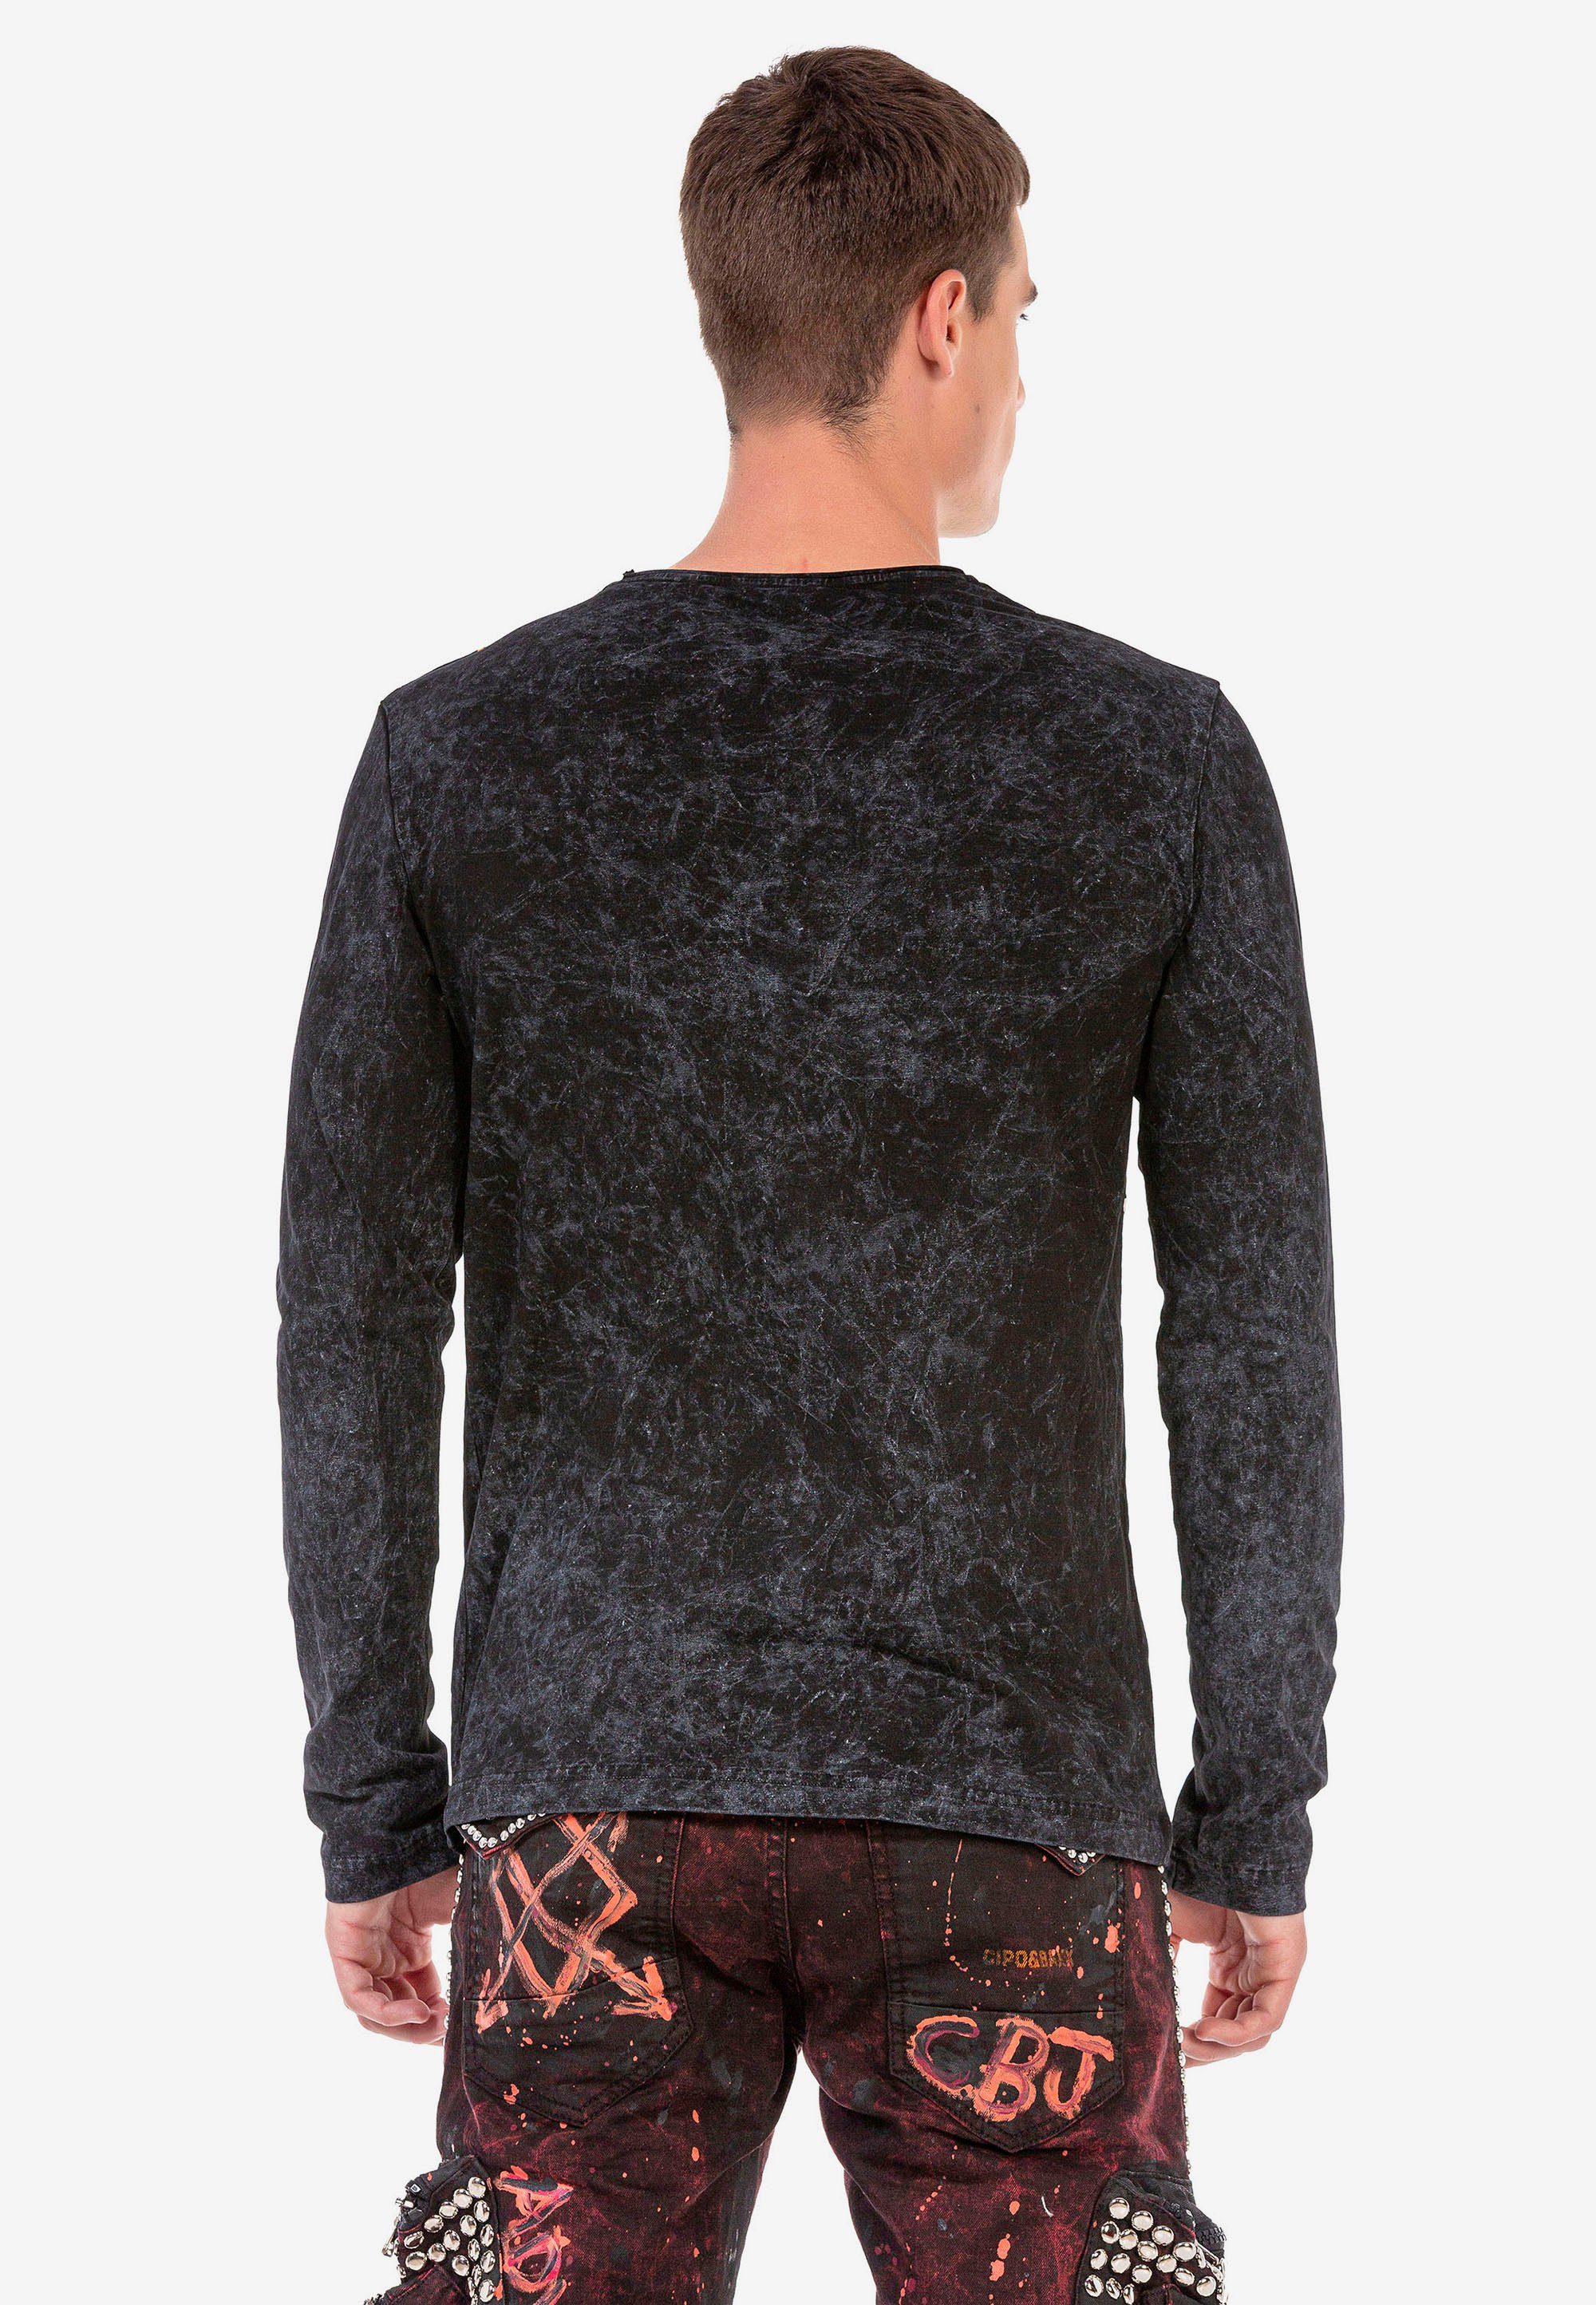 Langarmshirt schwarz mit Baxx Cipo Frontprint trendigem &